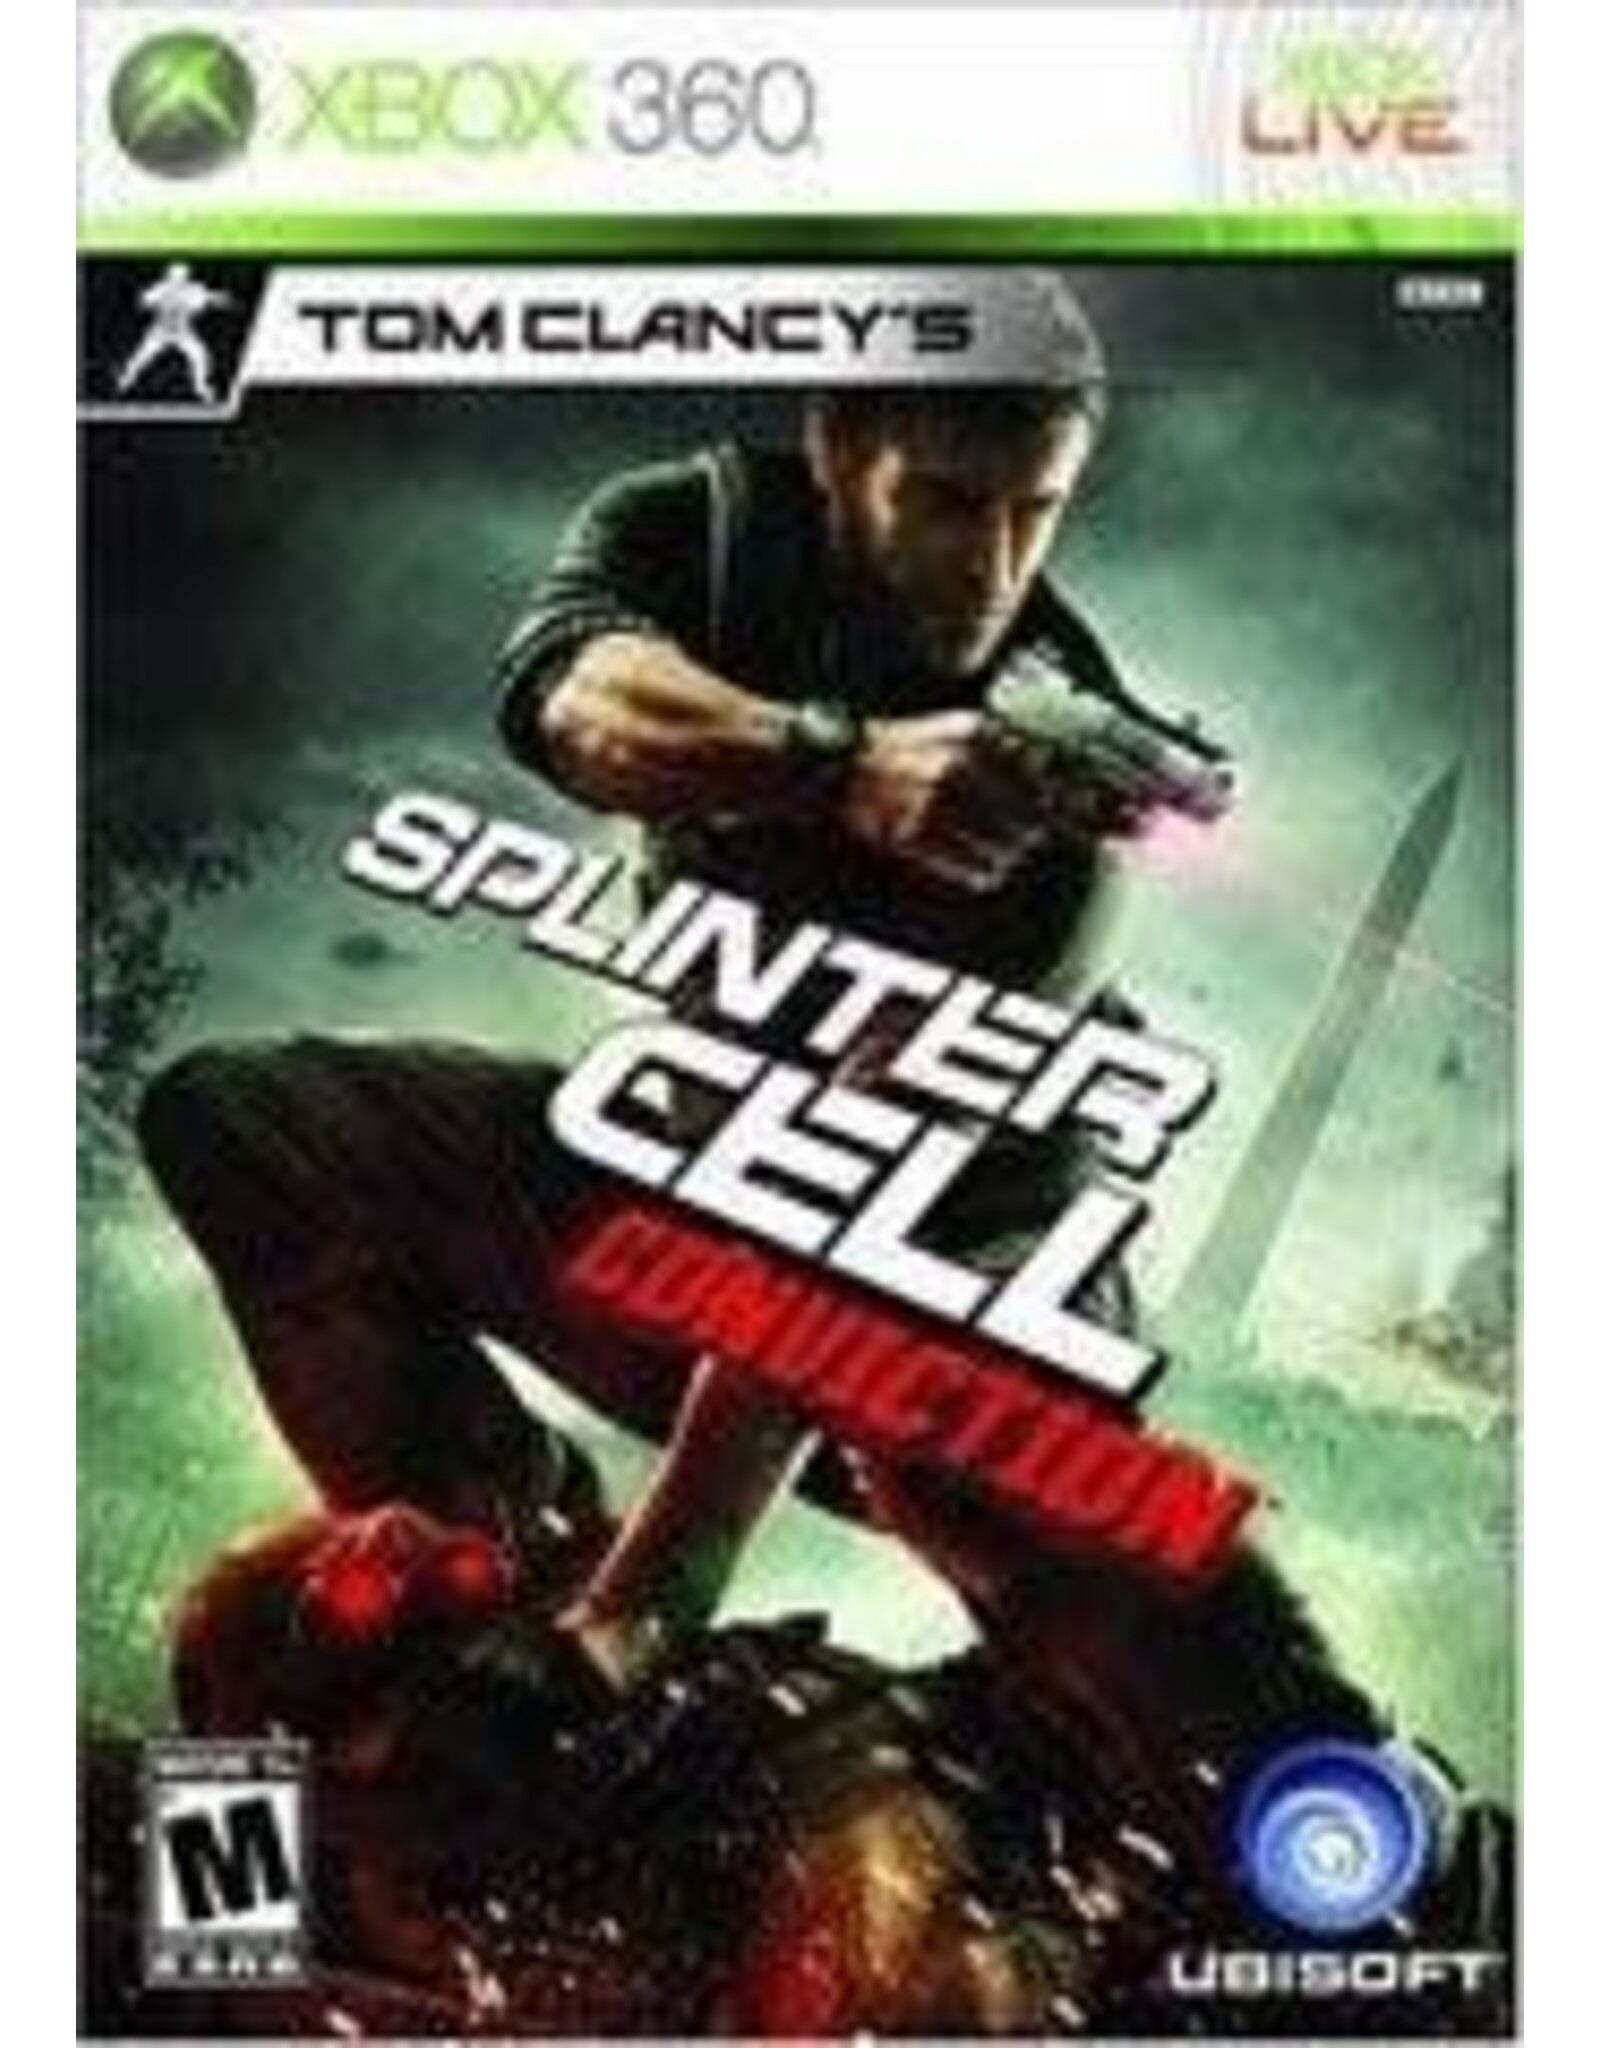 Xbox 360 Splinter Cell: Conviction (No Manual)